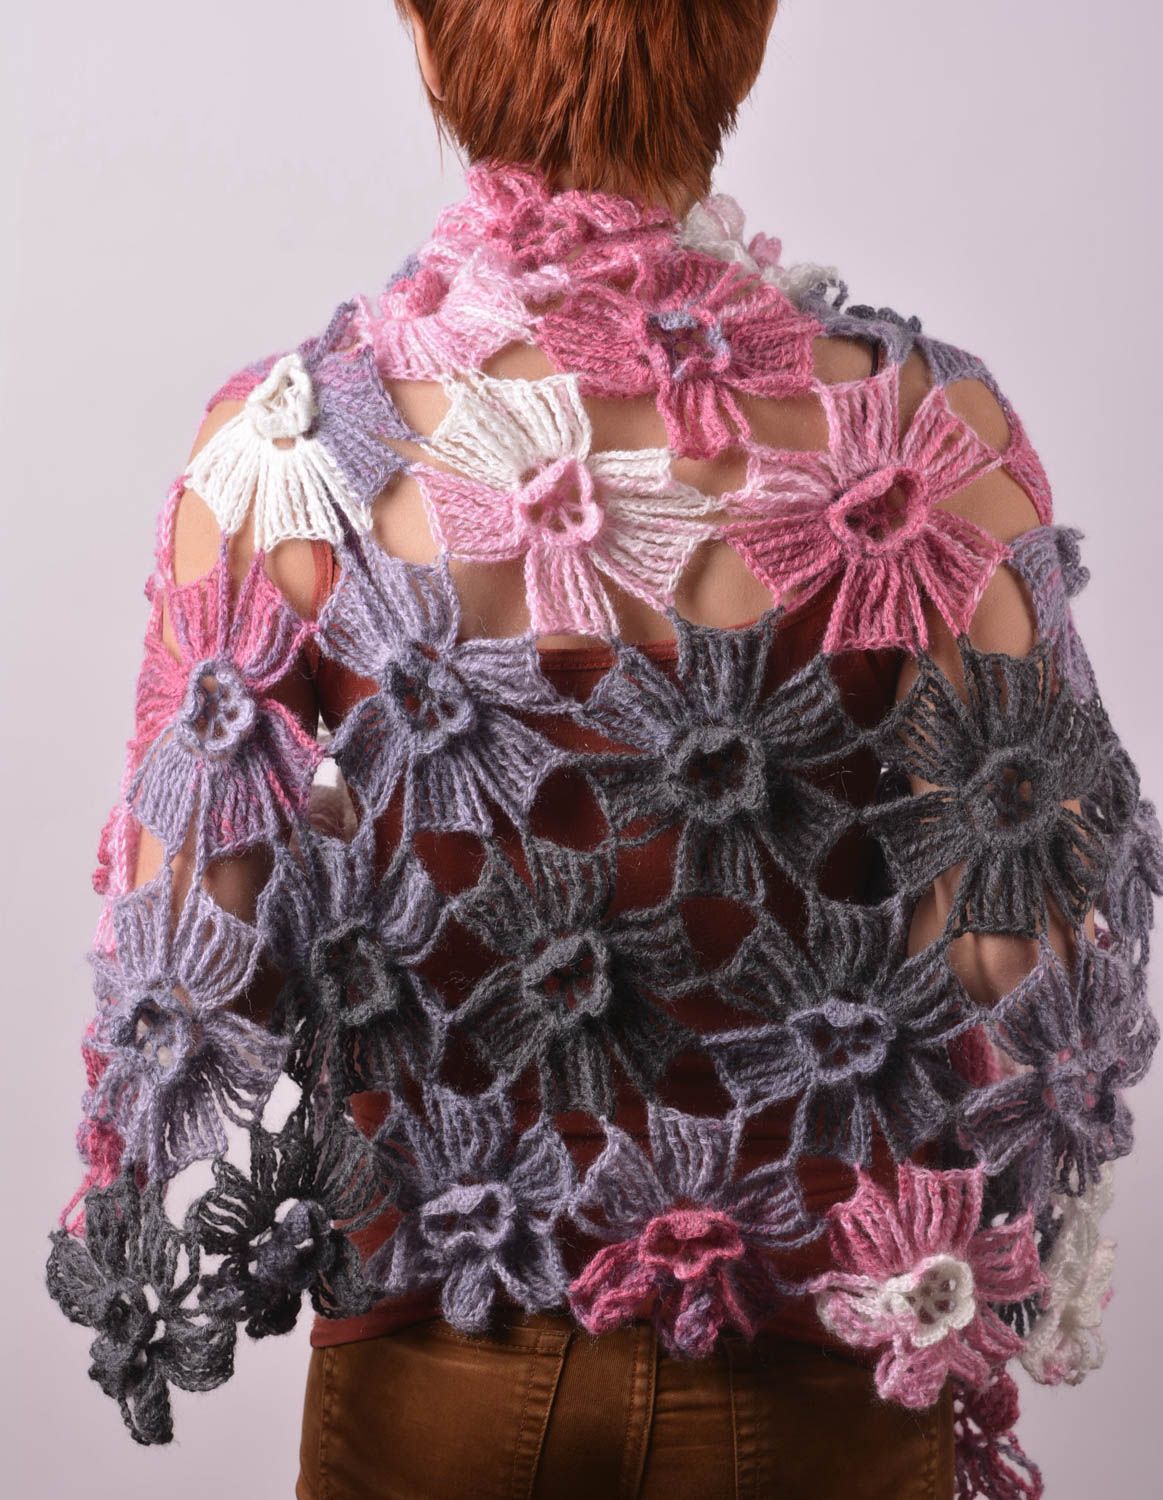 Stylish handmade crochet shawl fashion accessories for girls crochet ideas photo 1